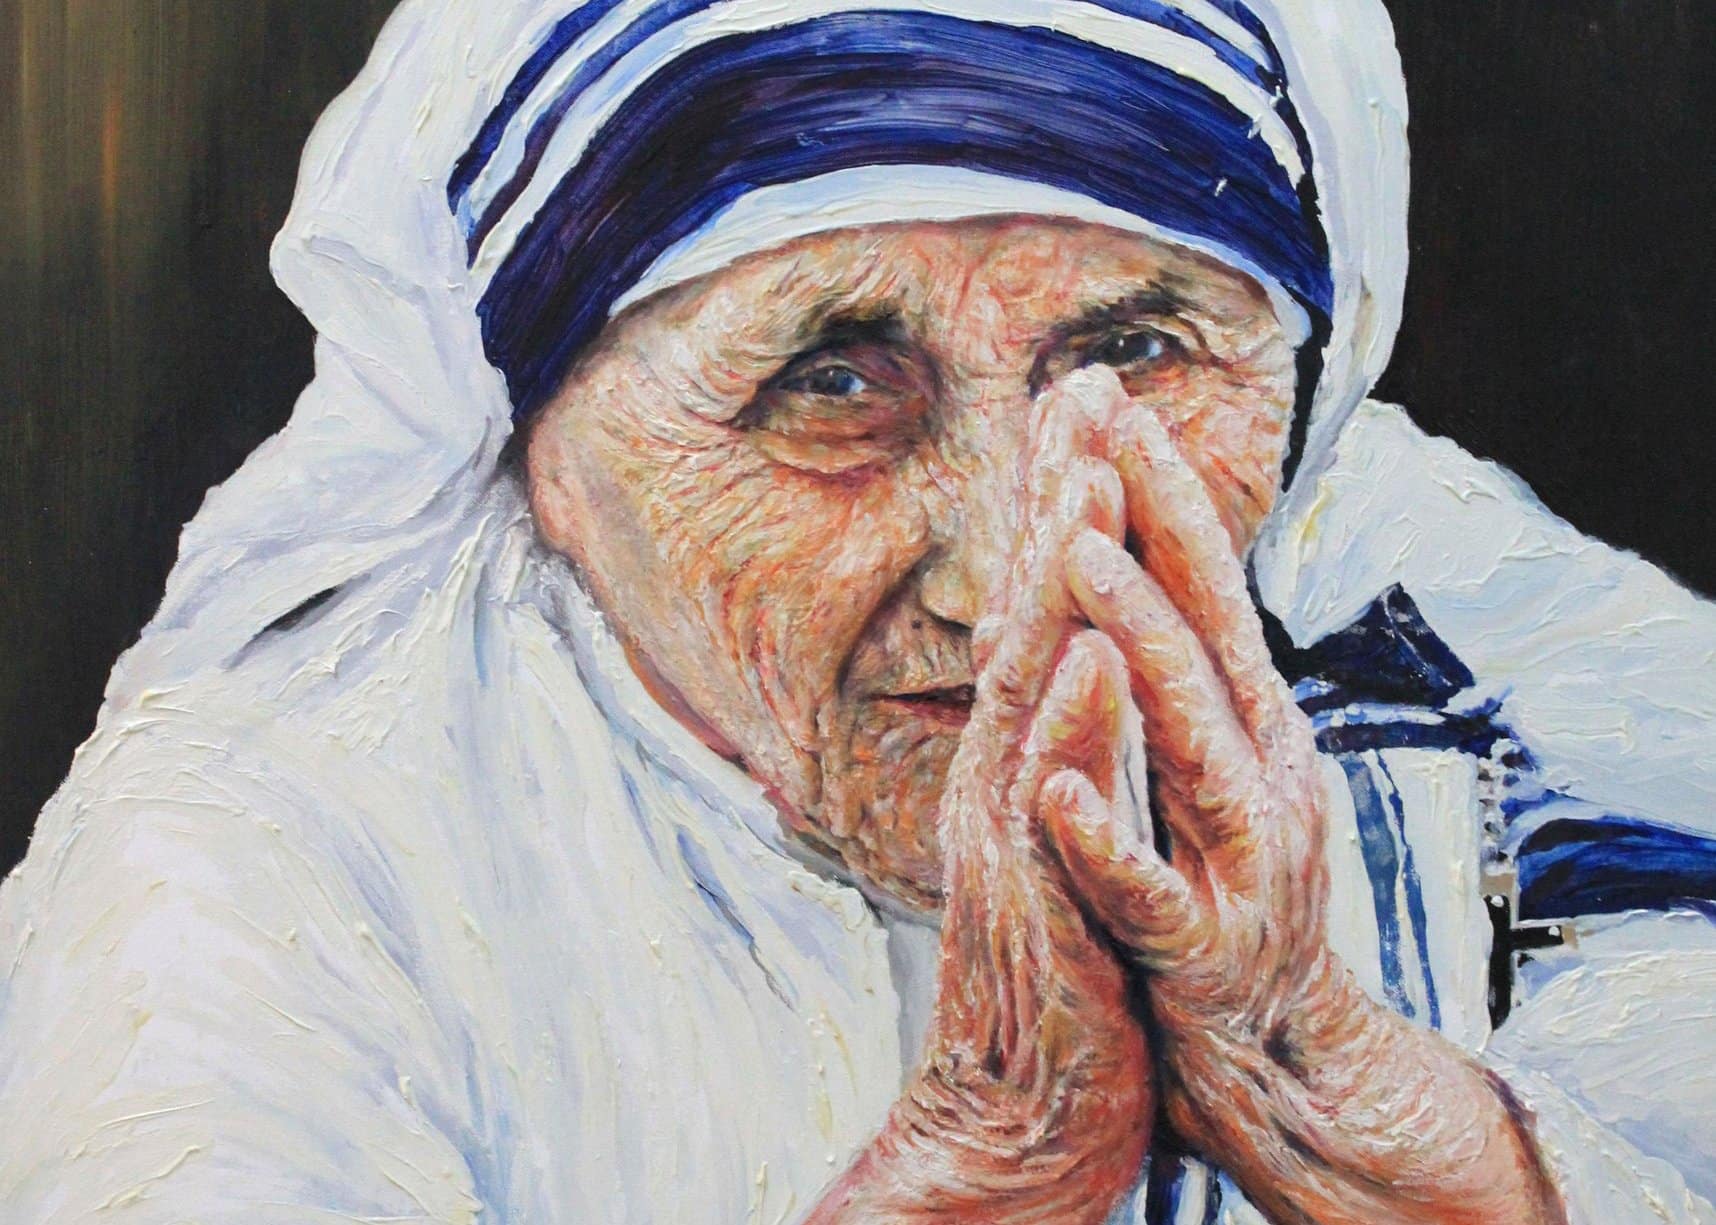 A painting of St. Teresa of Kolkata is seen in this 2011 file photo. (CNS photo/Anto Akkara)